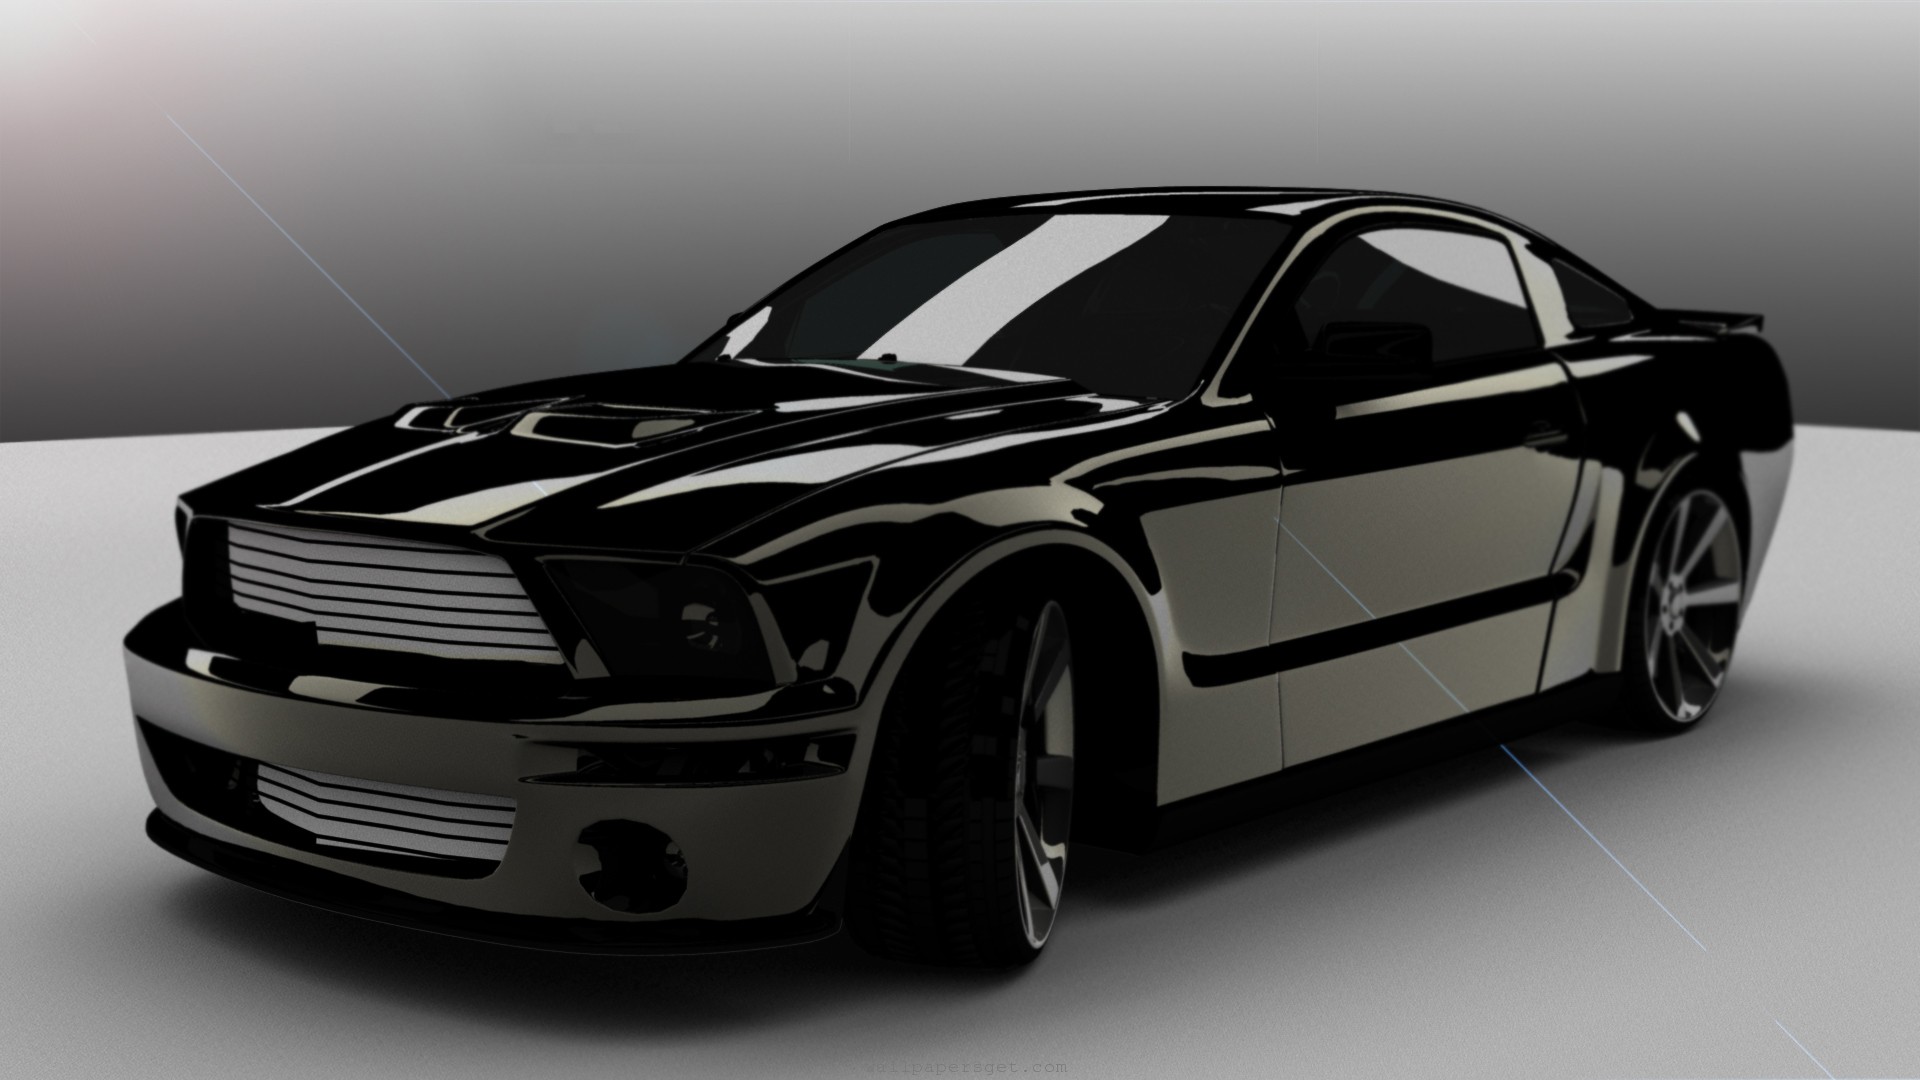 Black Car Image of Design Luxury Vehicle | Galleryautomo